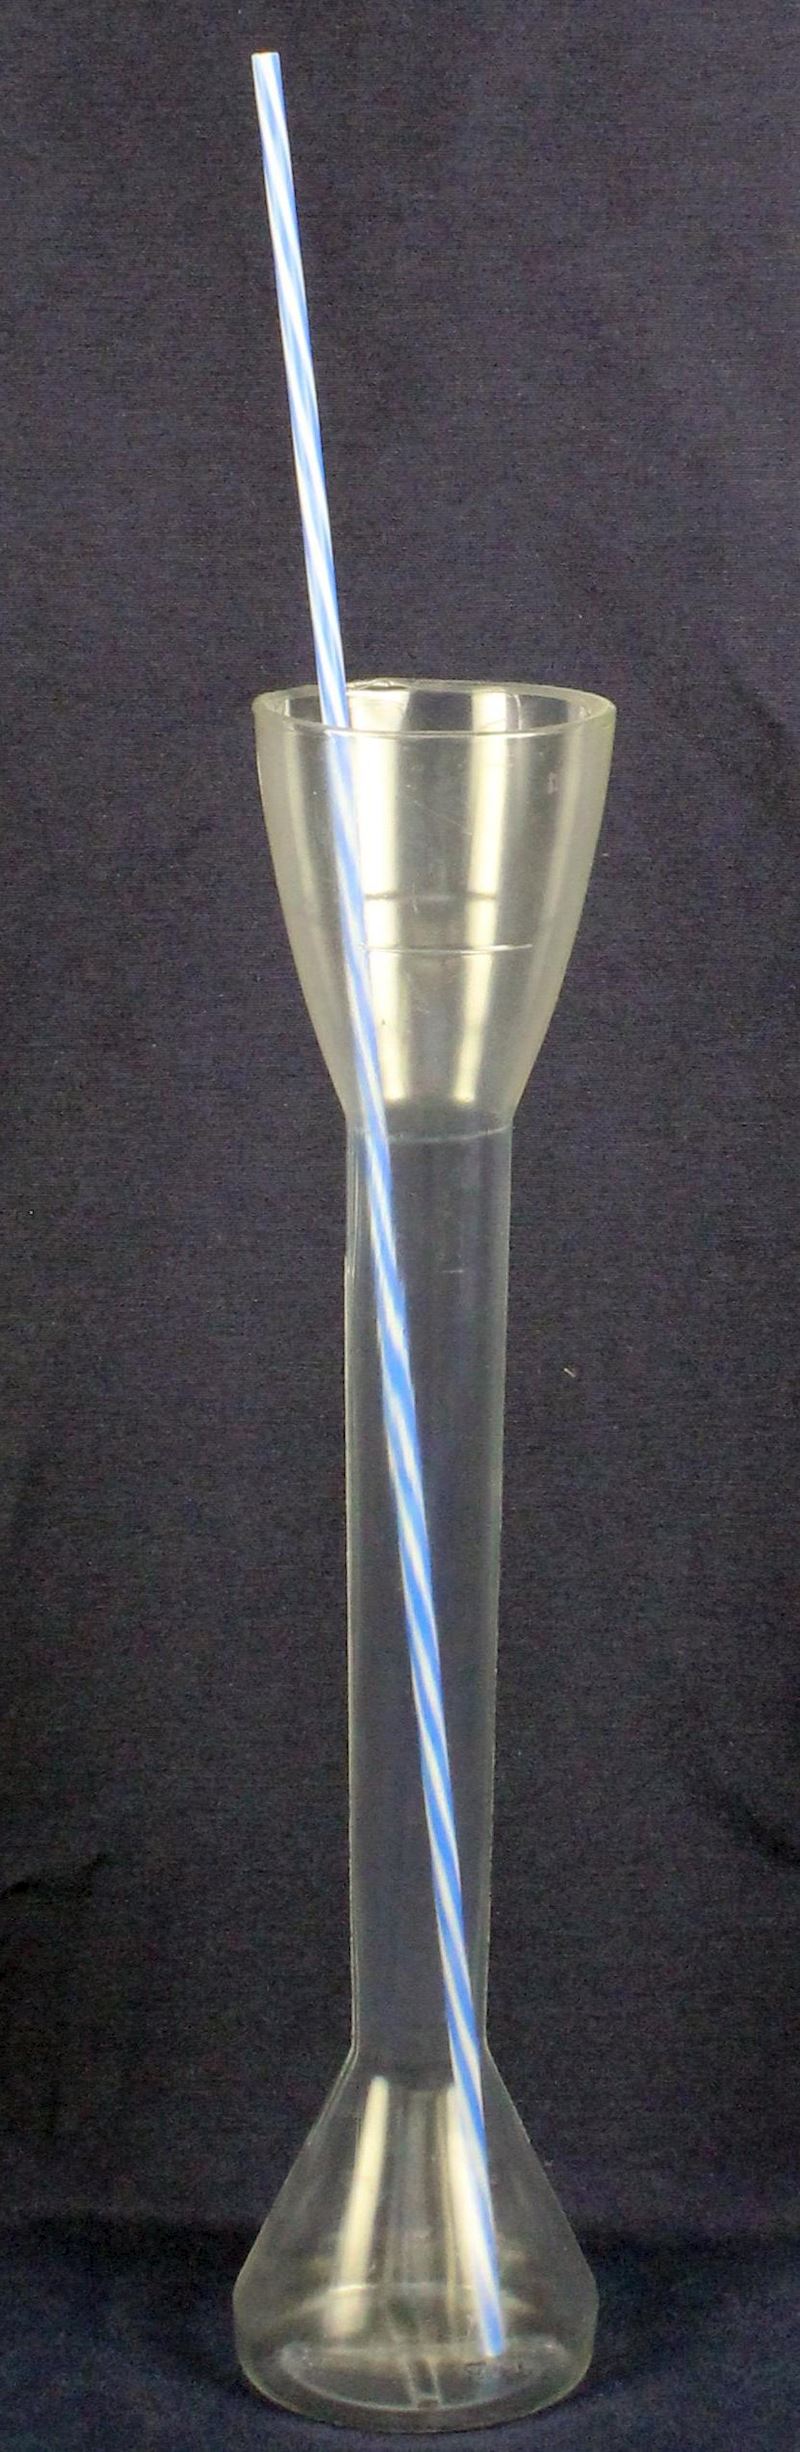 Trinkhalm 55 cm blau/weiss (Becher hat Nr. 53486)